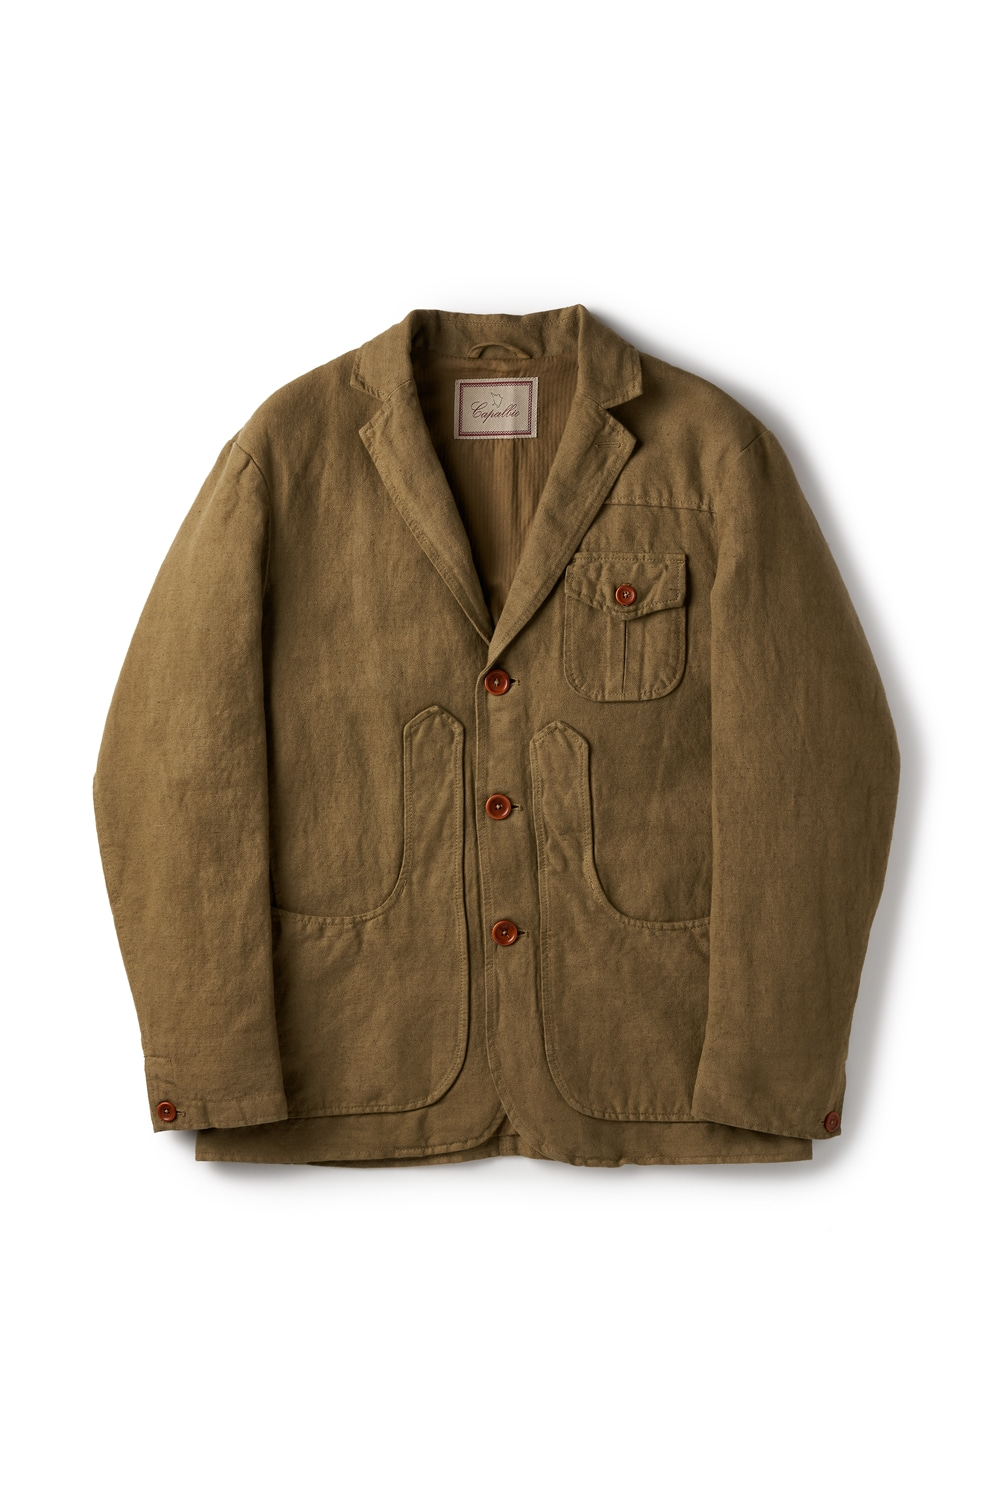 Cotton-linen jacket khakiCapalbio(카팔비오)